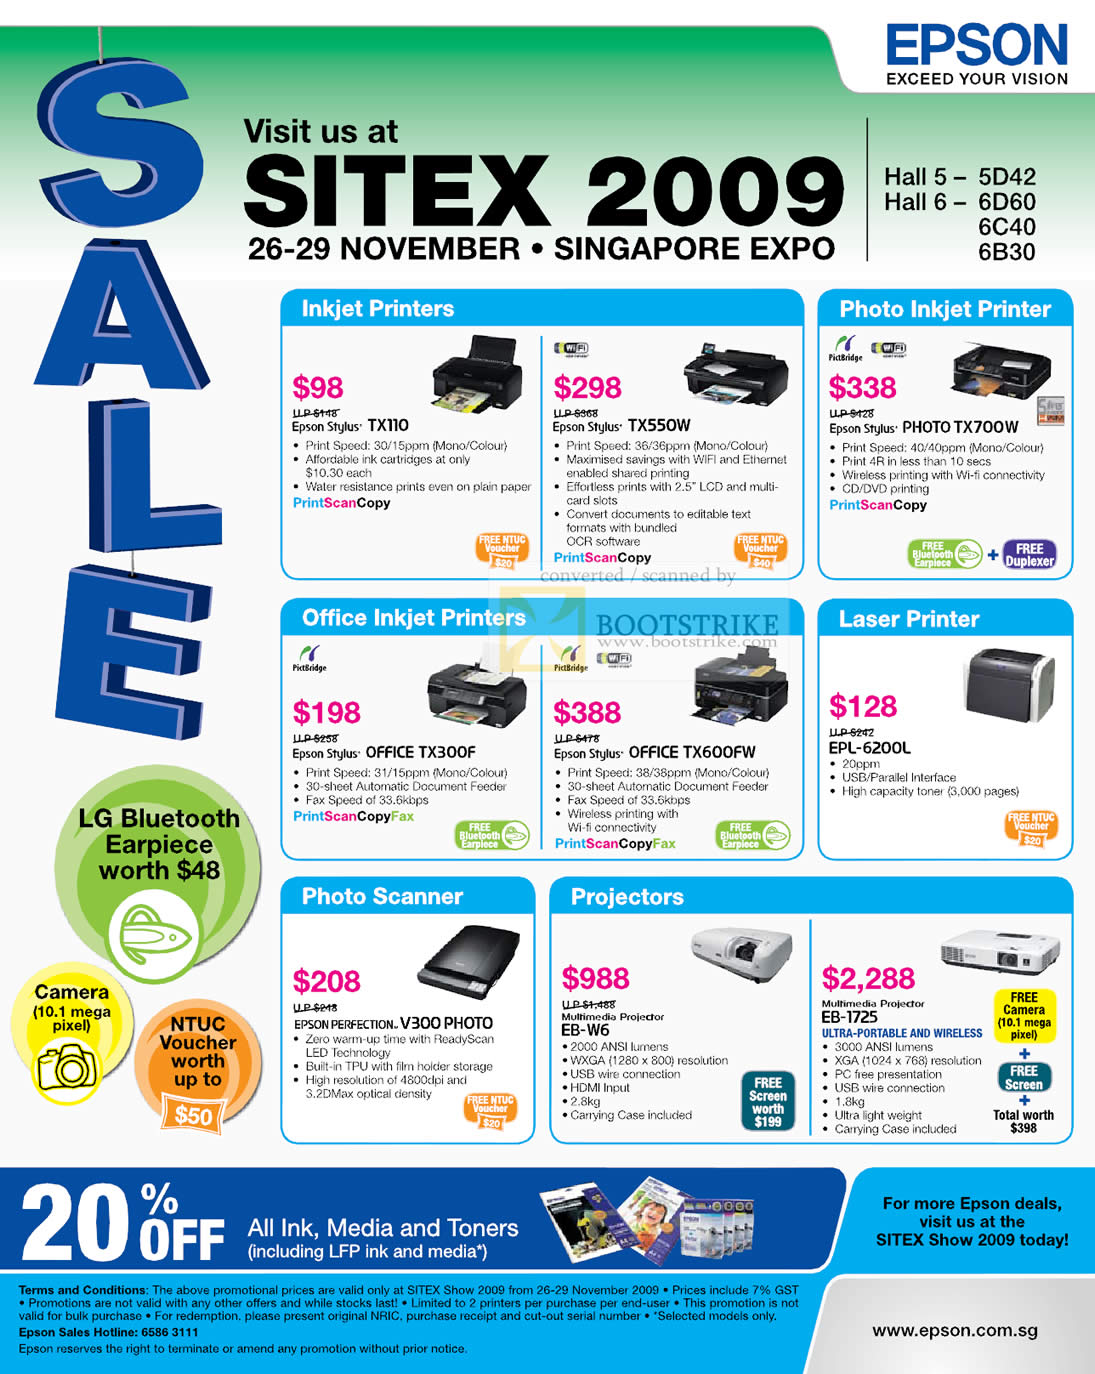 Sitex 2009 price list image brochure of Epson Printers Inkjet Office Laser Photo Scanner Projectors Toners